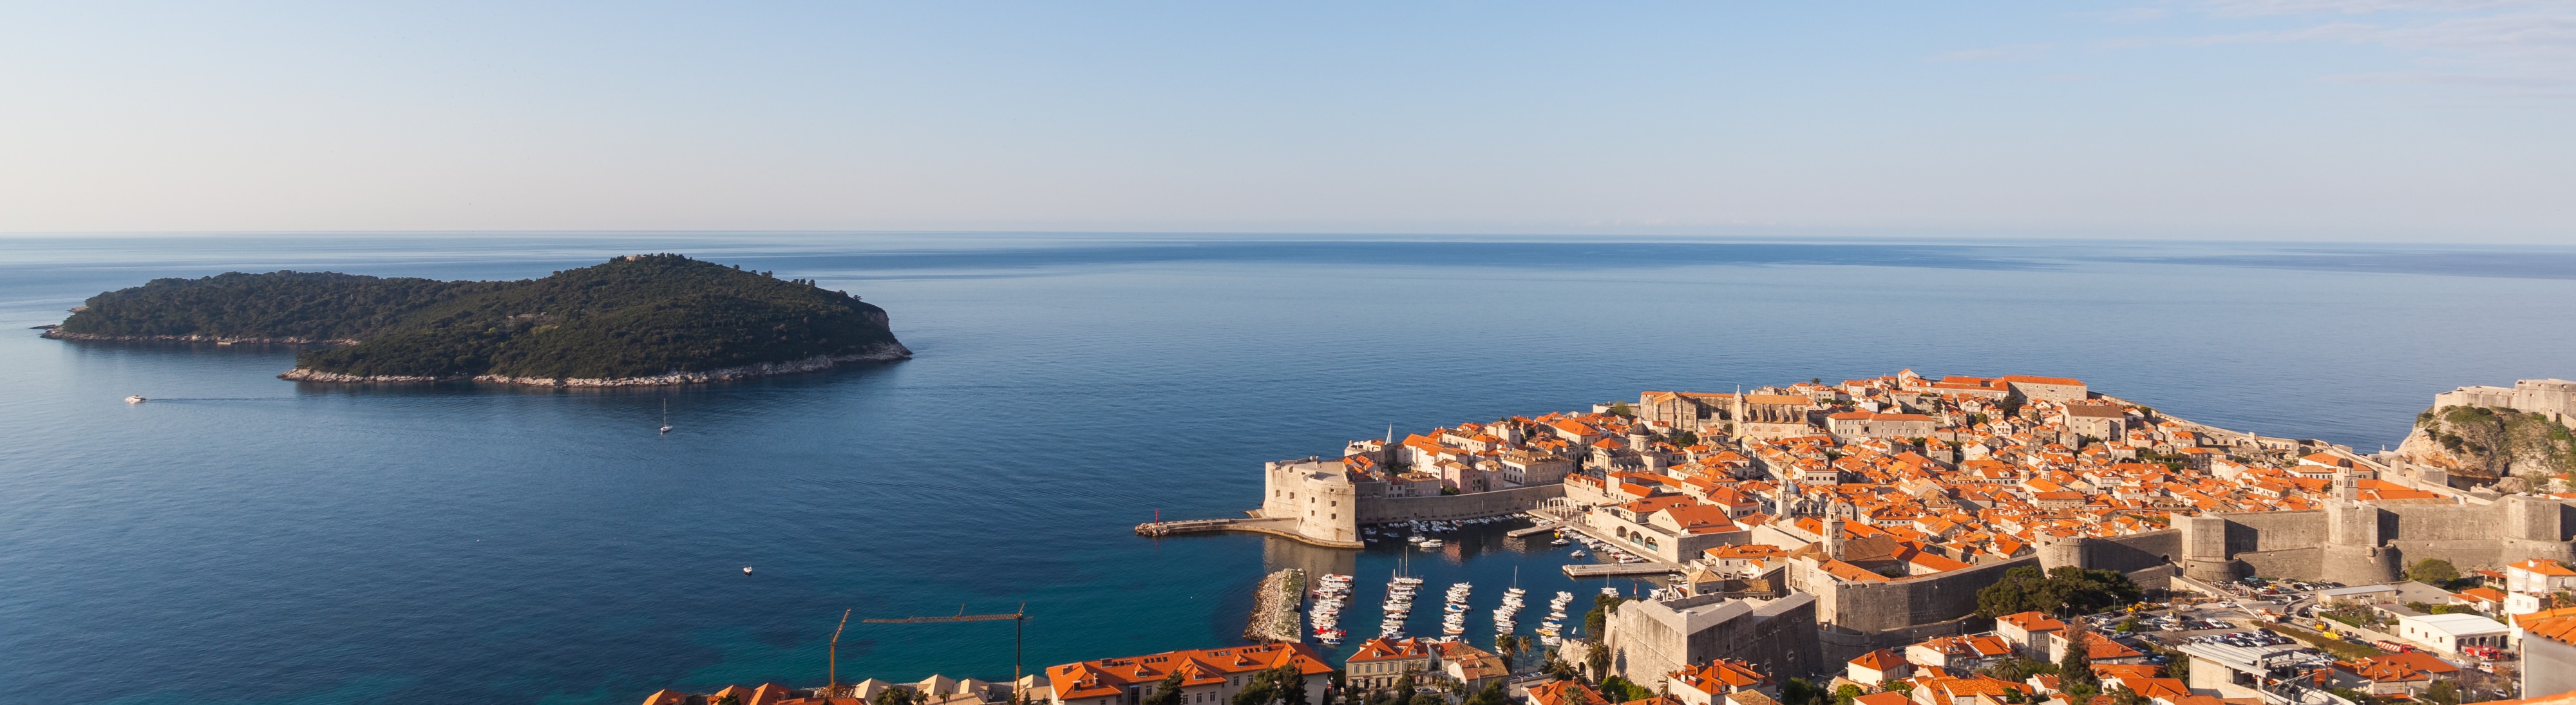 Casco viejo de Dubrovnik, Croacia, 2014-04-14, DD 02